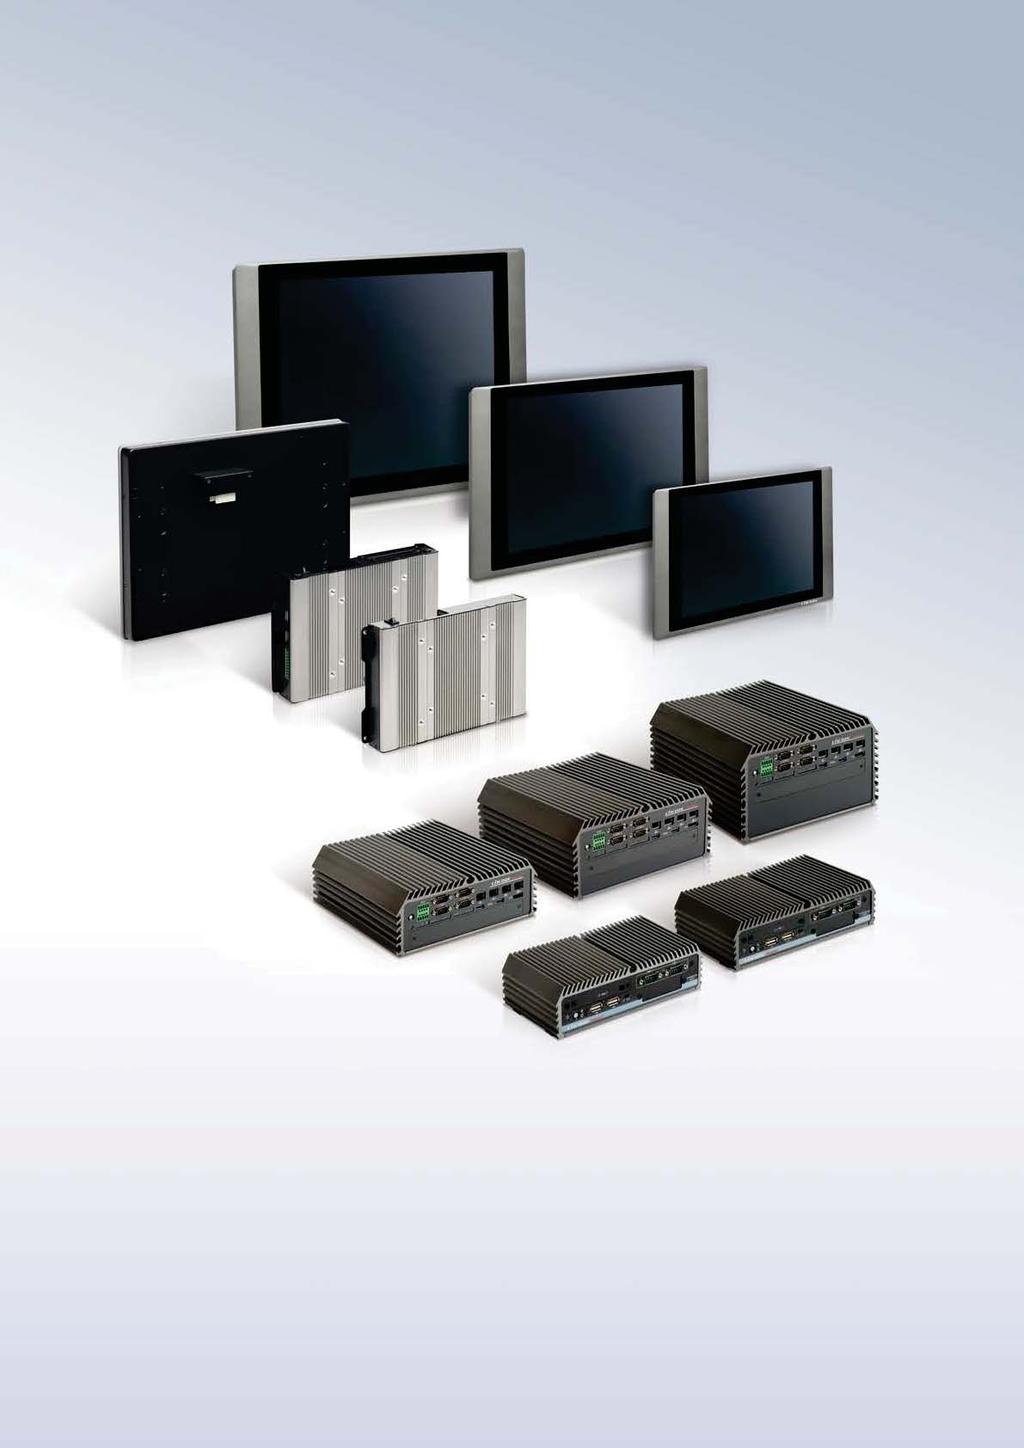 Industrial Computing System Provider